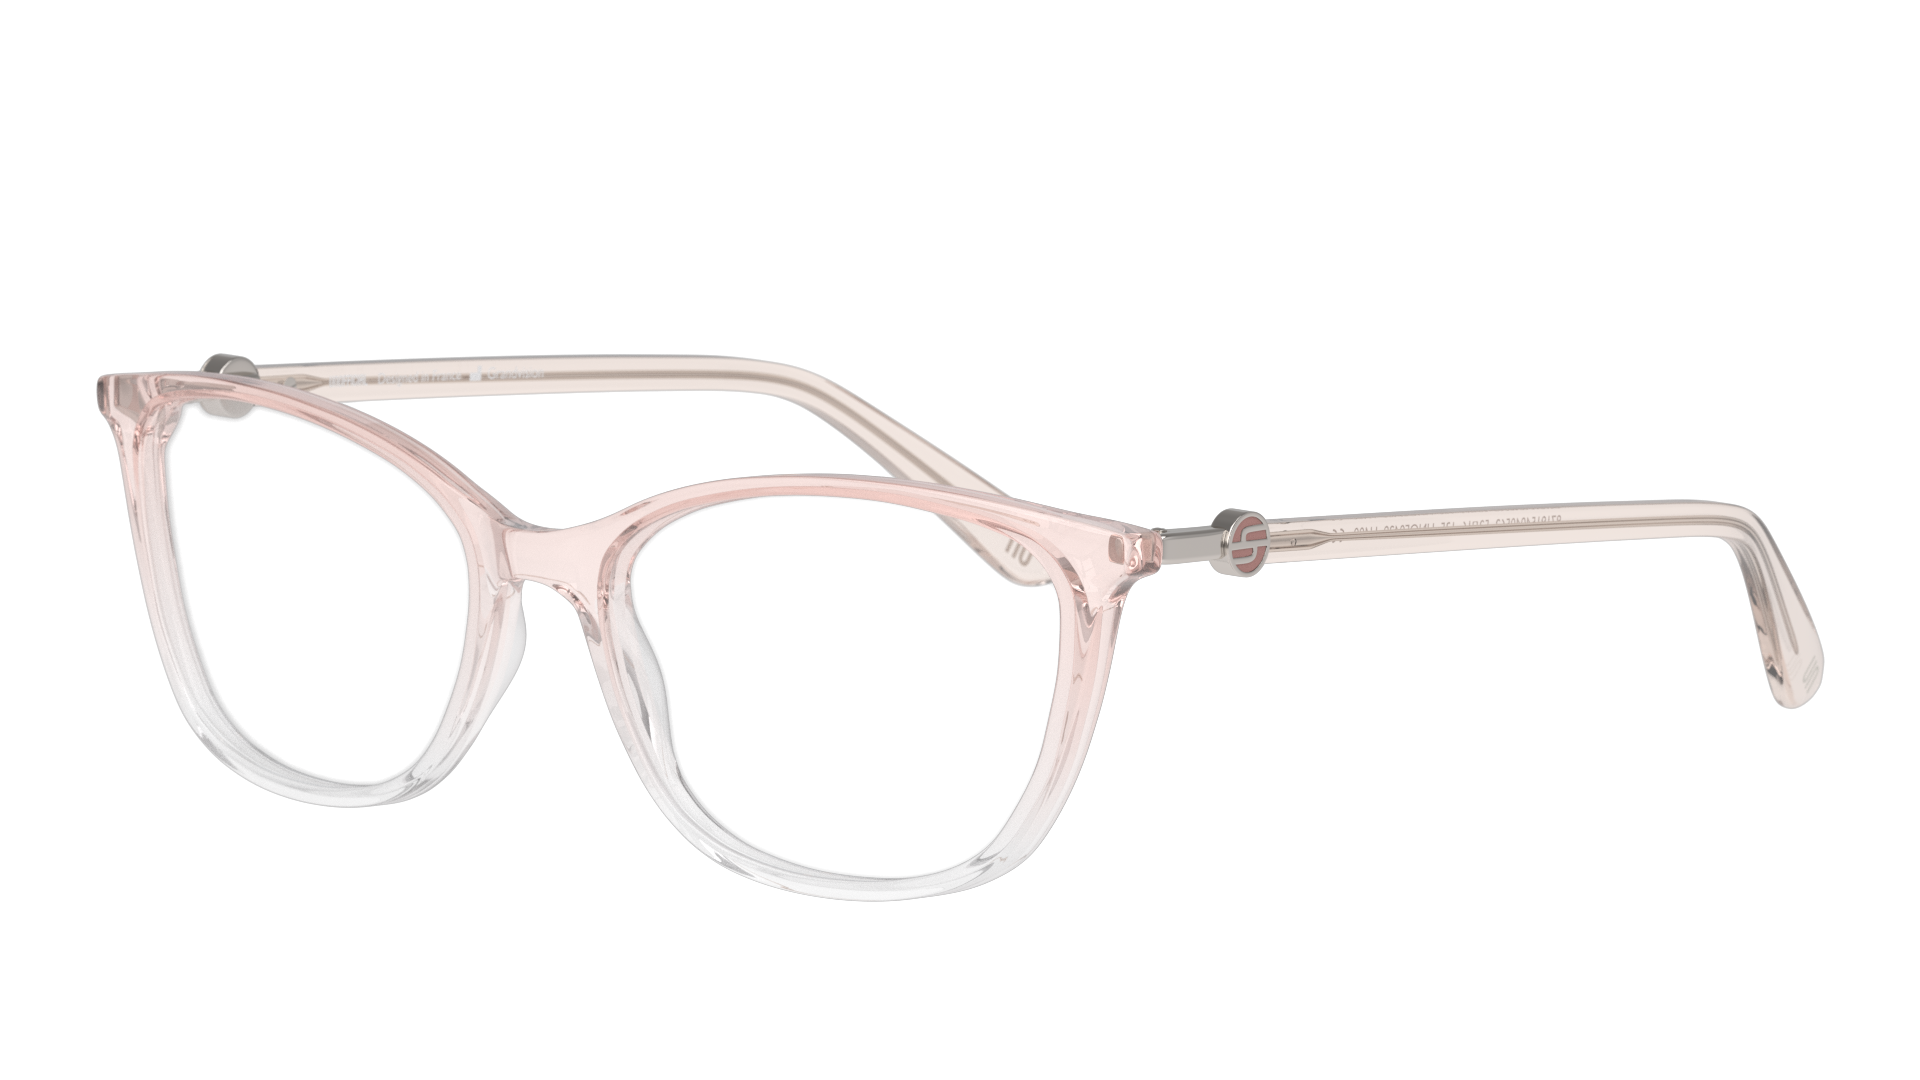 Angle_Left01 Unofficial UNOF0429 Glasses Transparent / Transparent, Pink